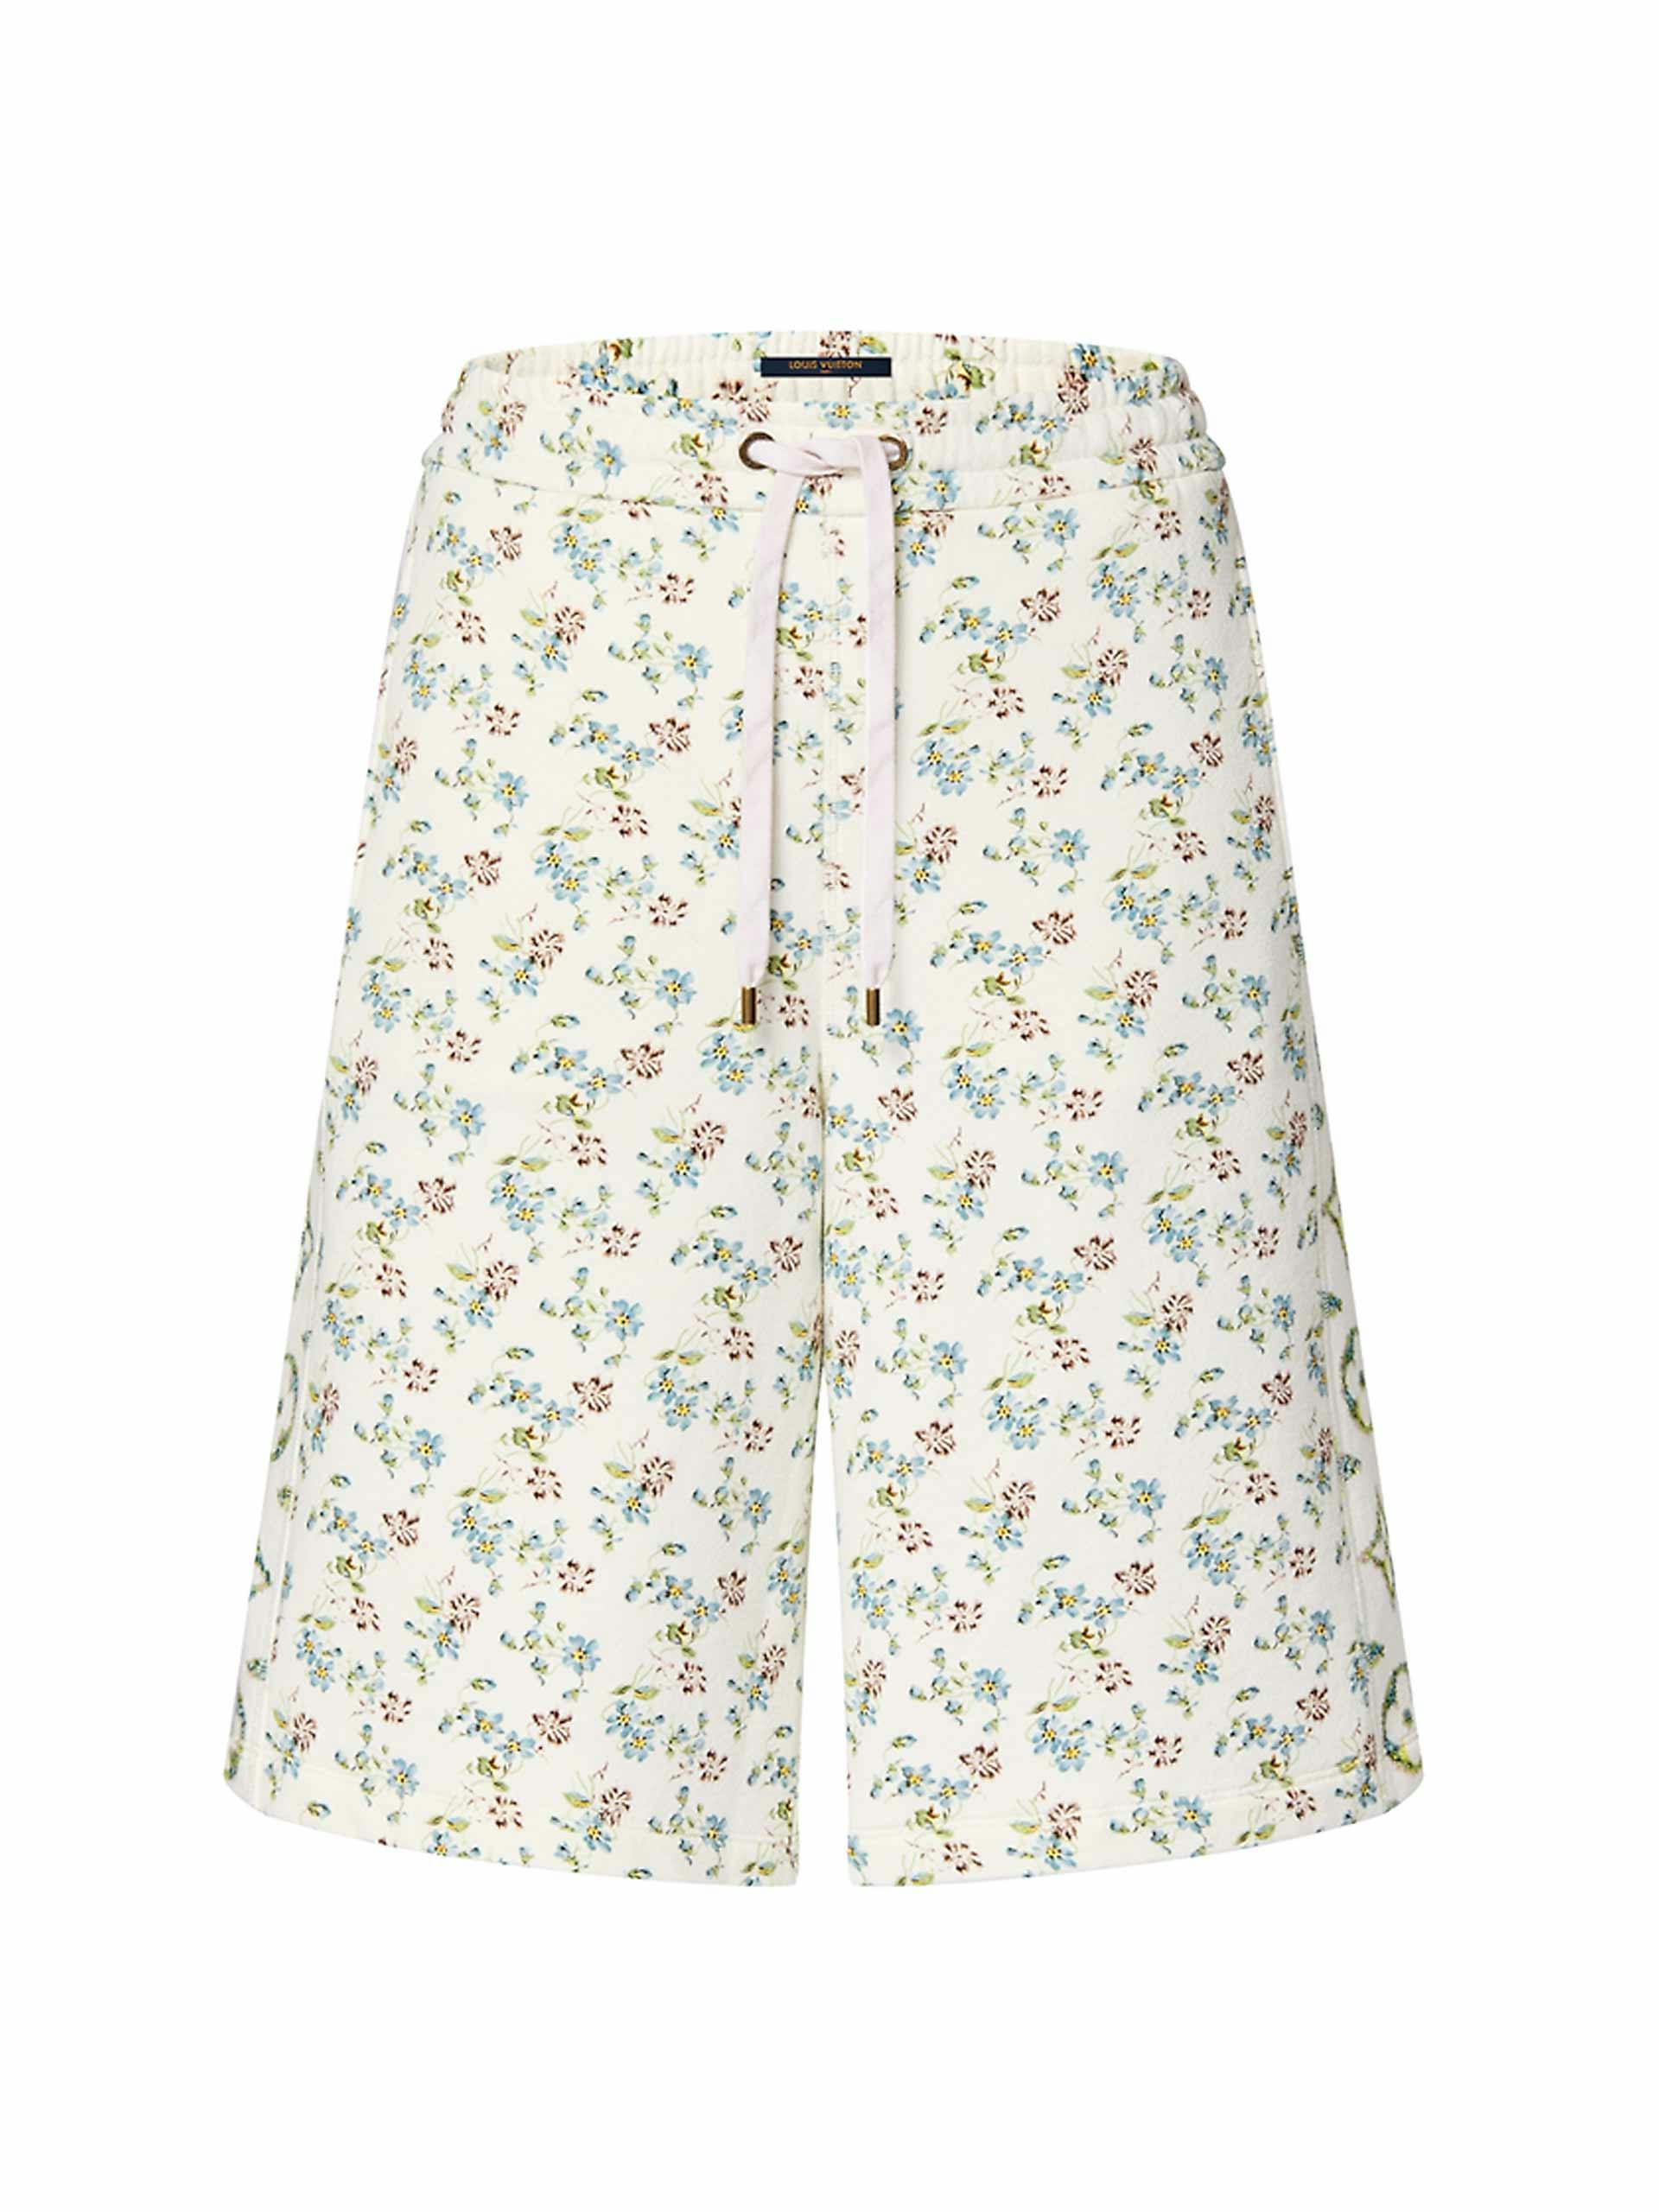 Floral print bermuda shorts